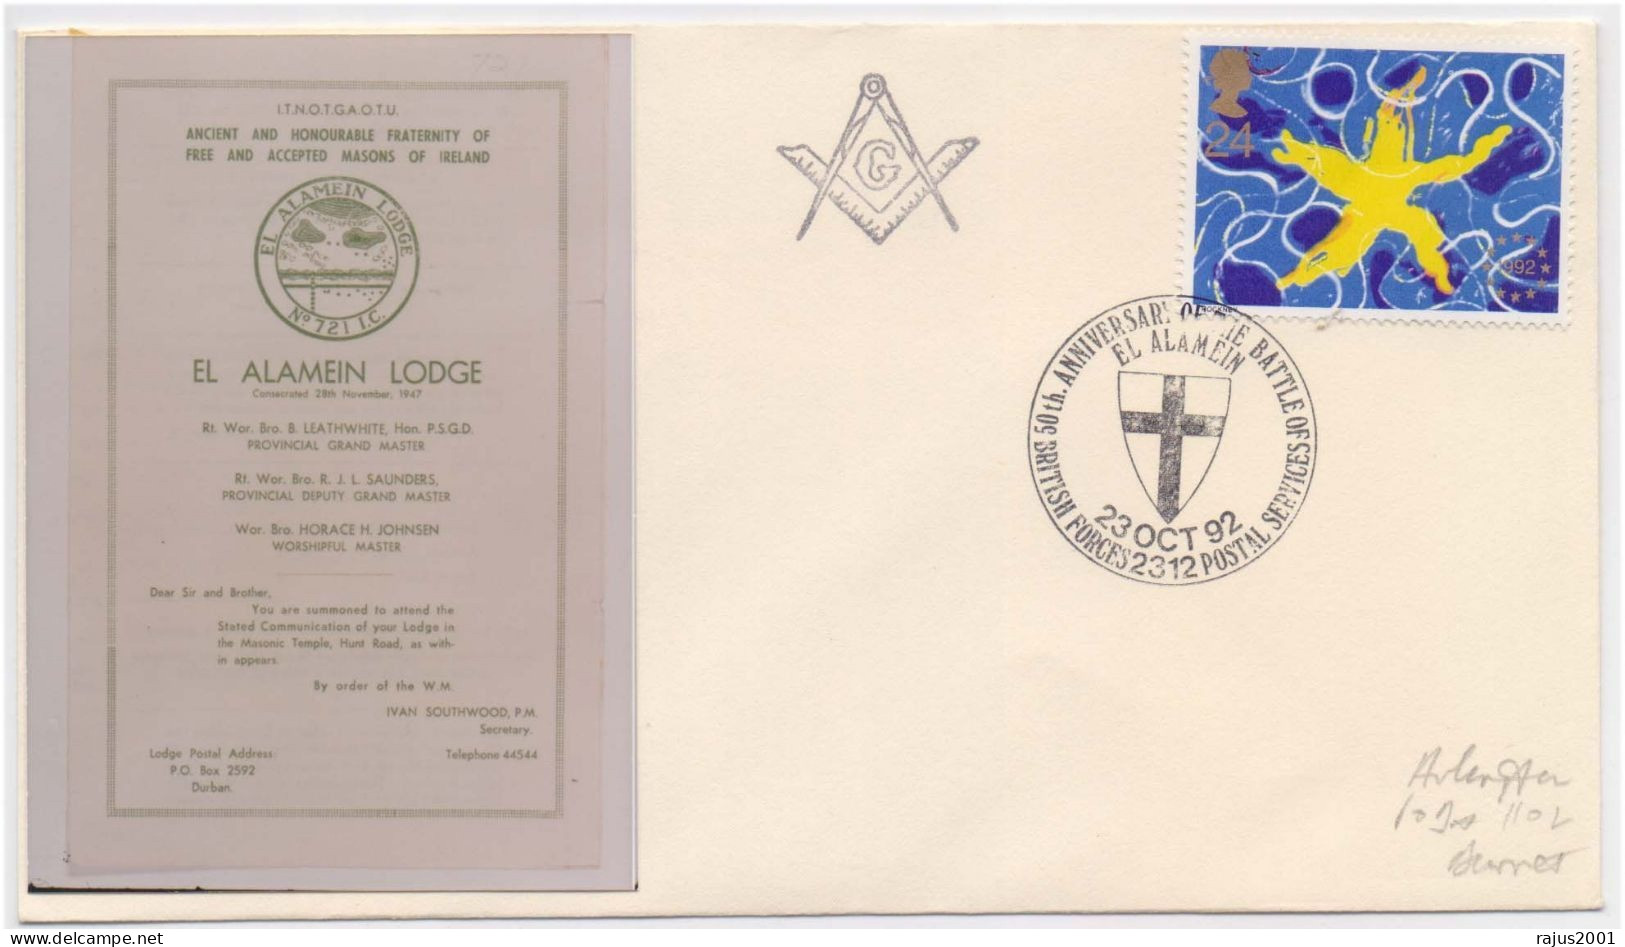 EL Alamein Lodge No. 721 I.C. Masons Of Ireland, Freemasonry Masonic Limited Edition Only 125 Cover Issued - Franc-Maçonnerie